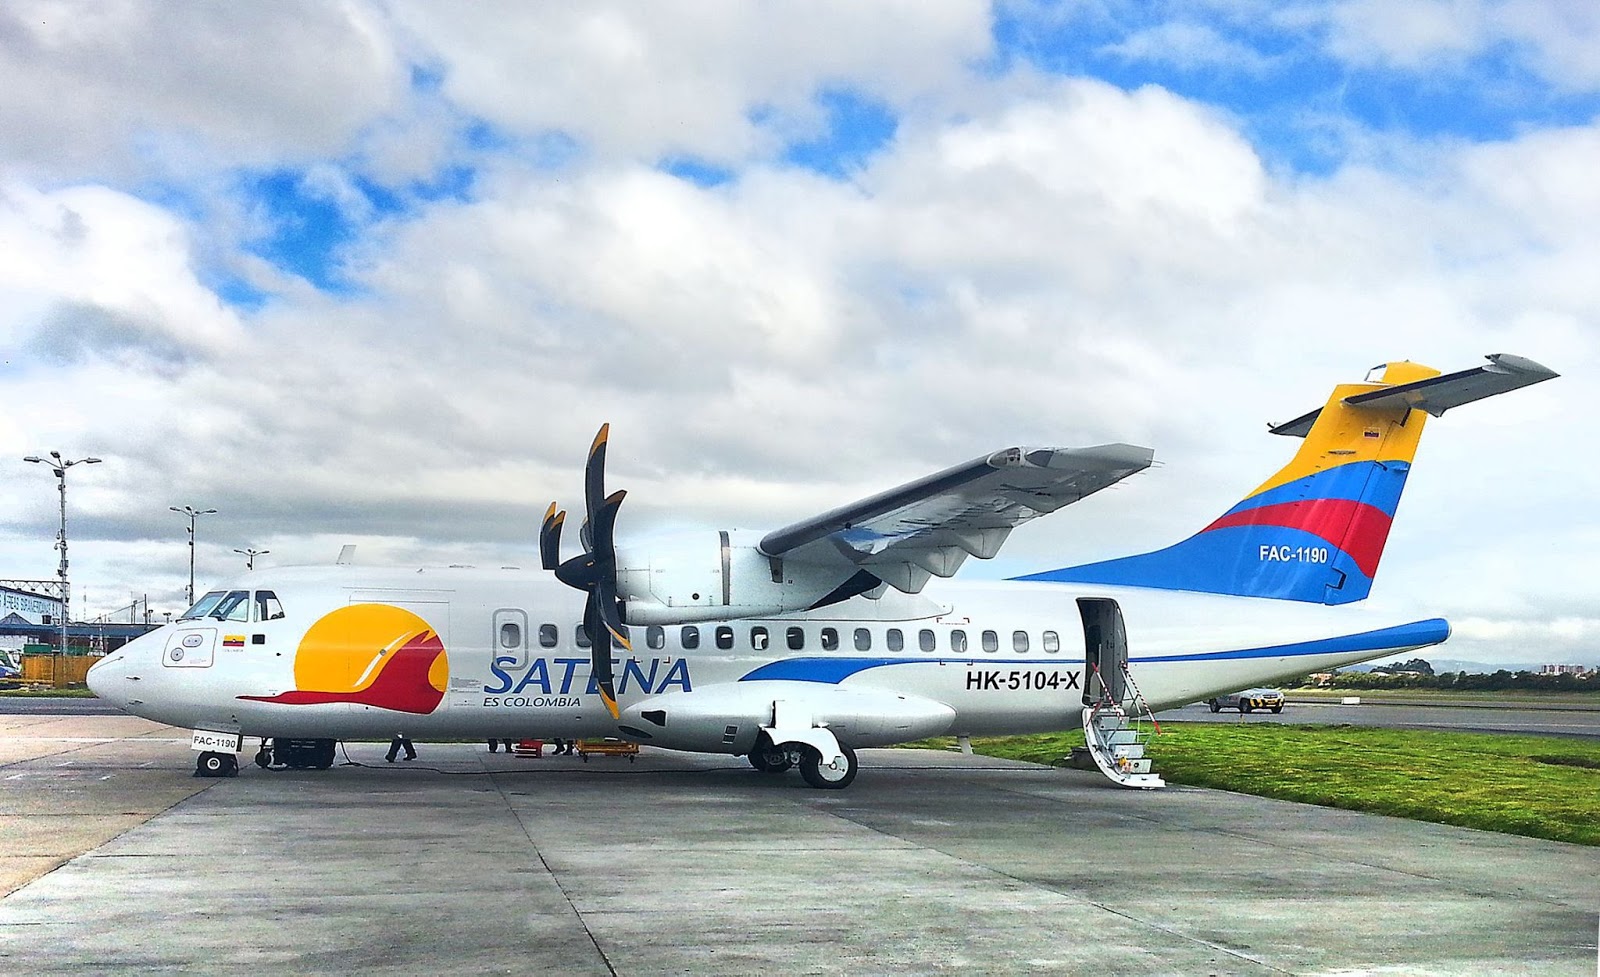 ATR 42-500 recientemente incorporado a la flota de SATENA